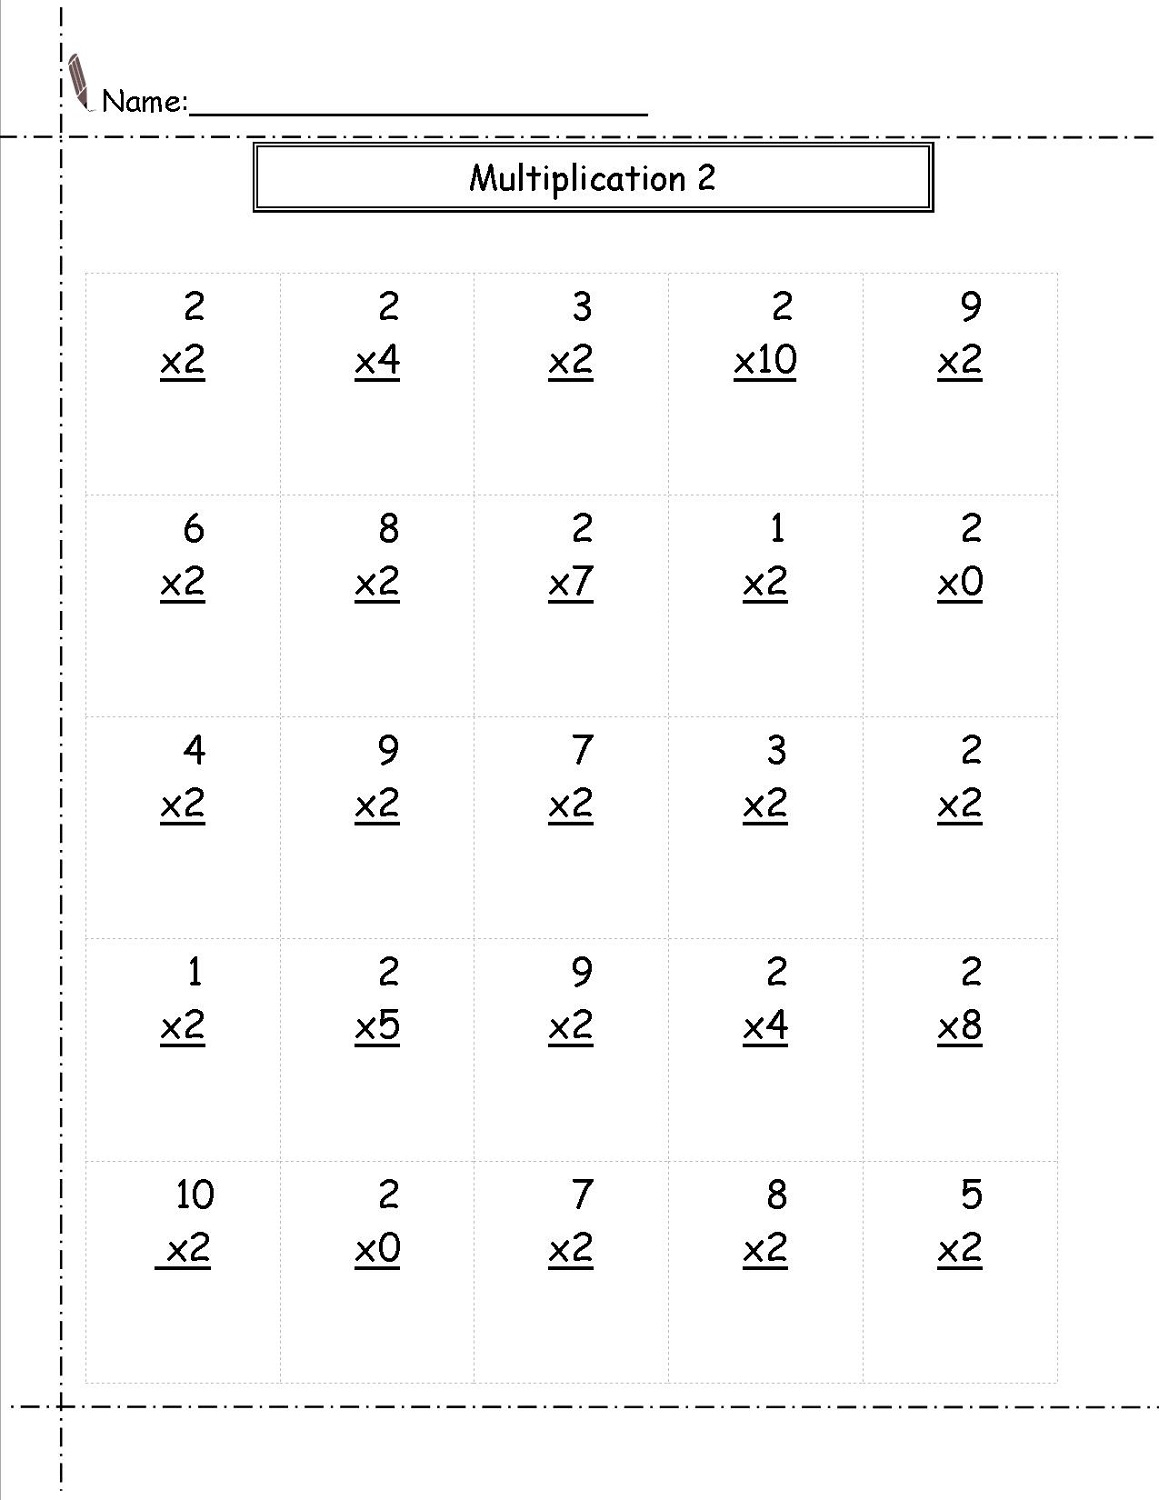 Times Tables Worksheet 1 10 | Printable Worksheets And inside Printable Practice Multiplication Tables